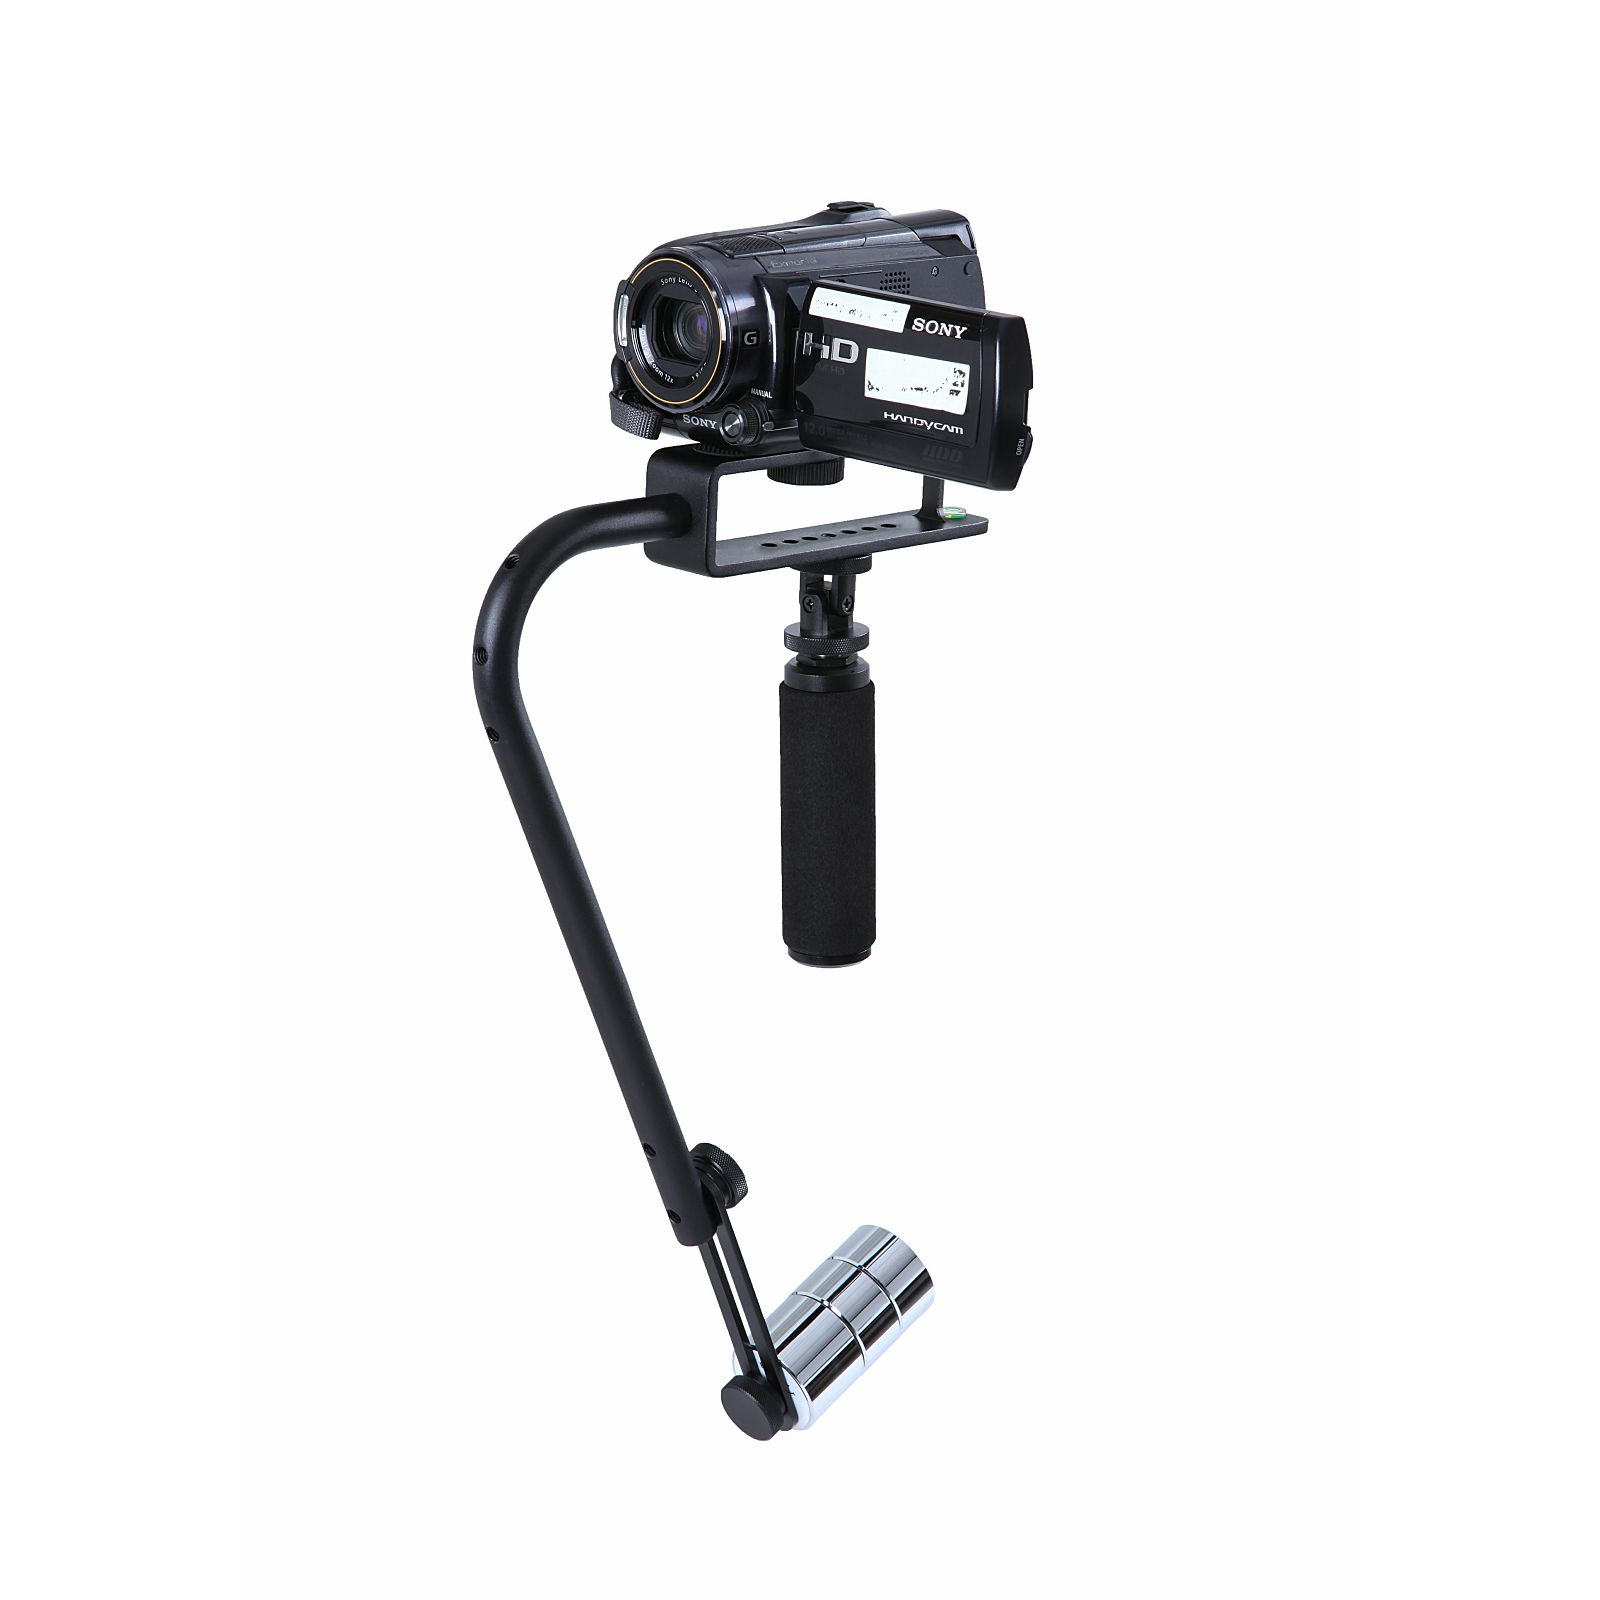 Sevenoak Camera Stabilizer SK-W04 SteadyCam stabilizator DSLR fotoaparata i kamere do 1,35kg za video snimanje s utegom